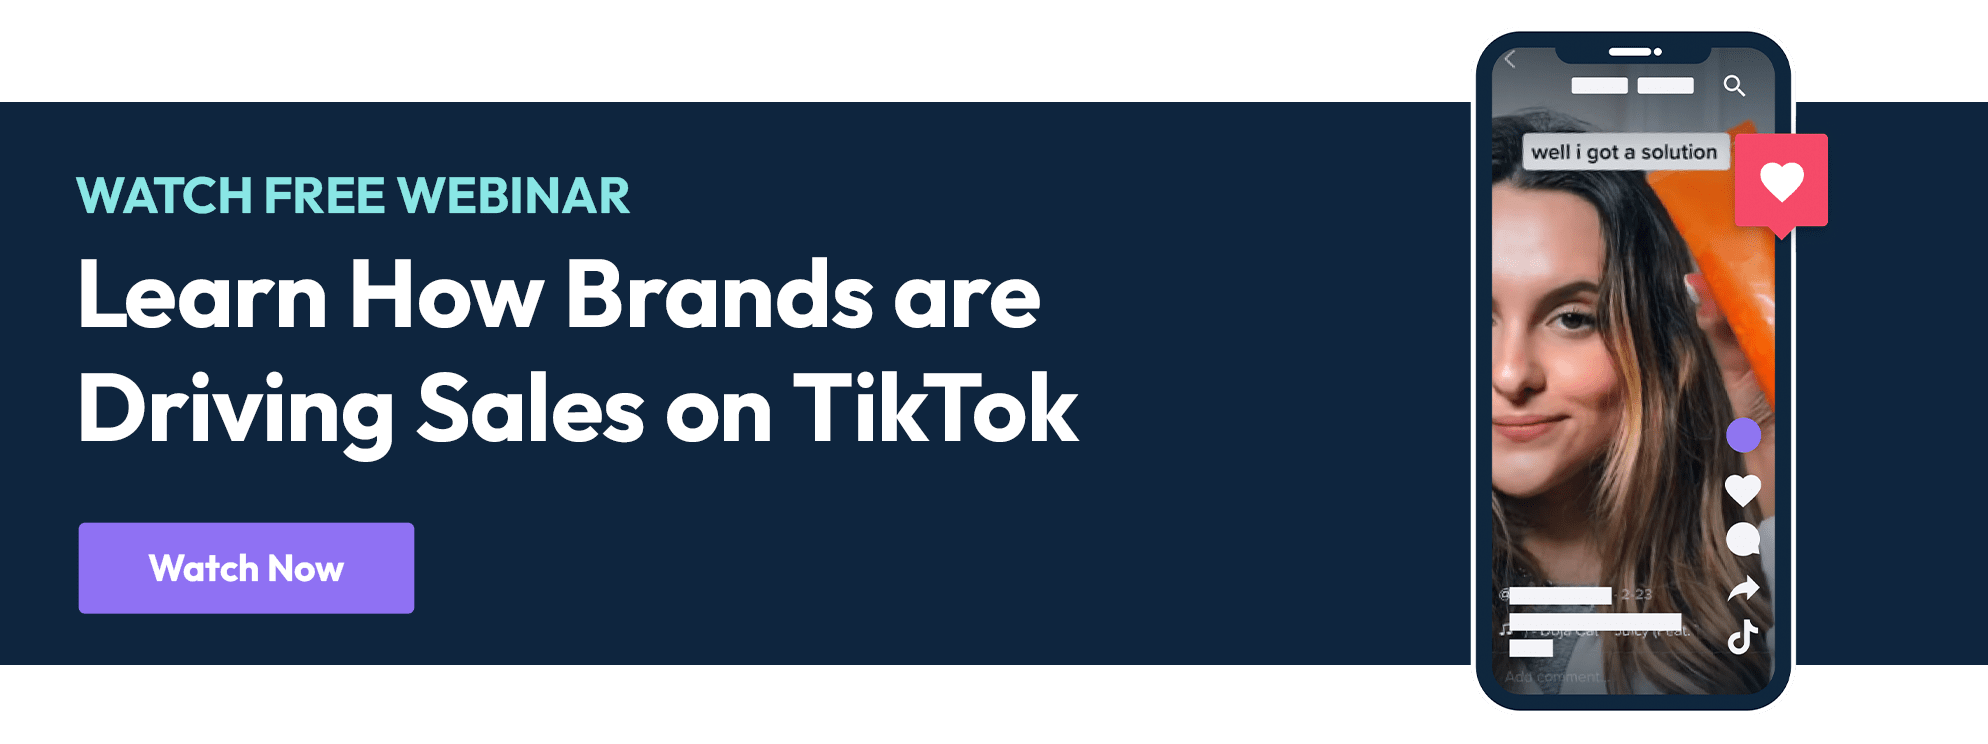 Aim'n - Reaching new audiences and driving sales through TikTok